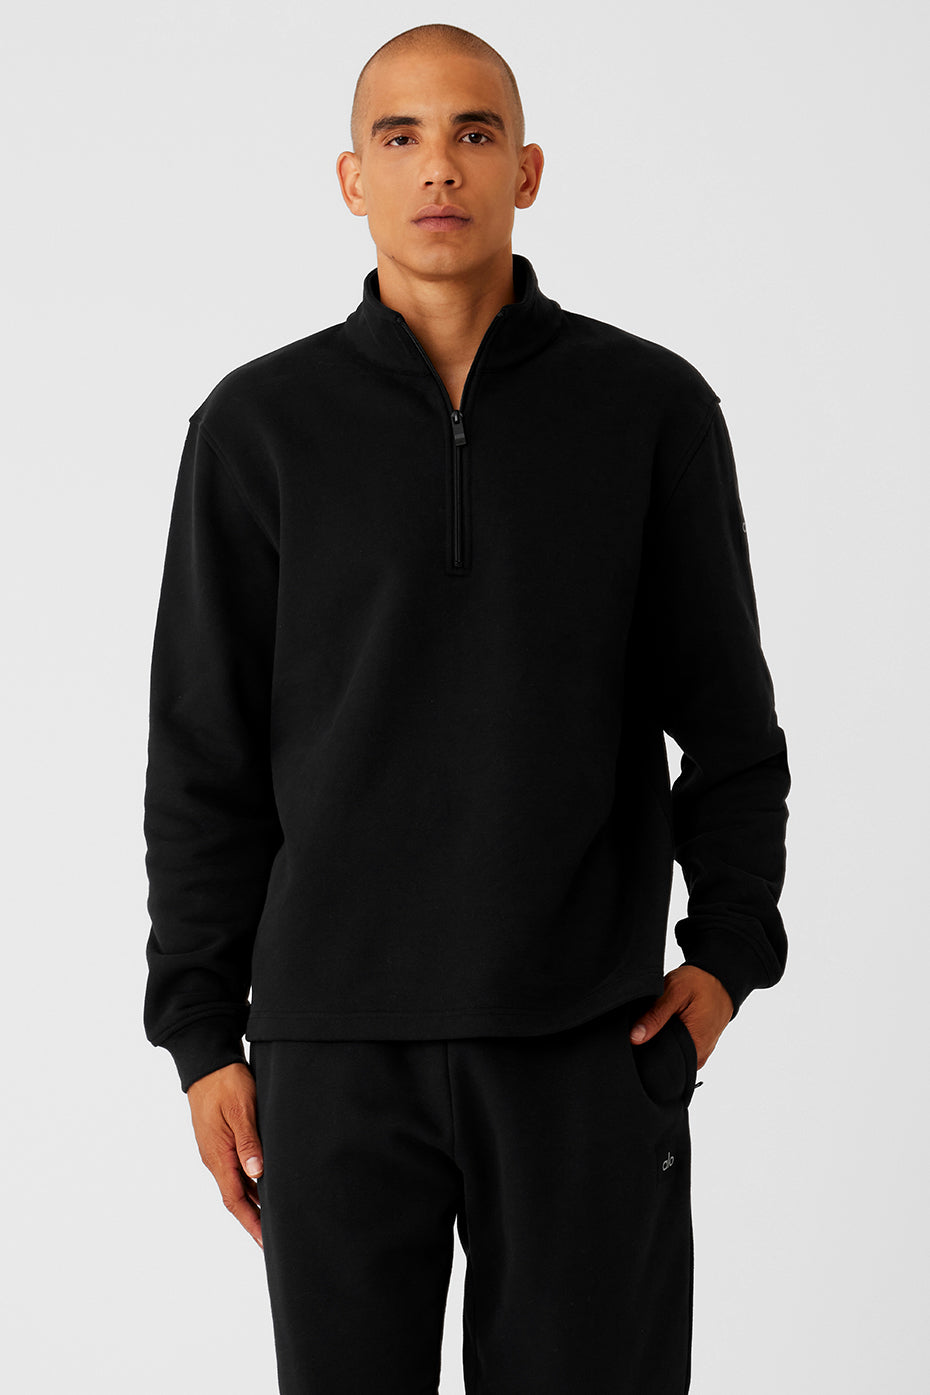 ALO Yoga Men's Impel Sweatshirt Black Size Medium M NWT $130